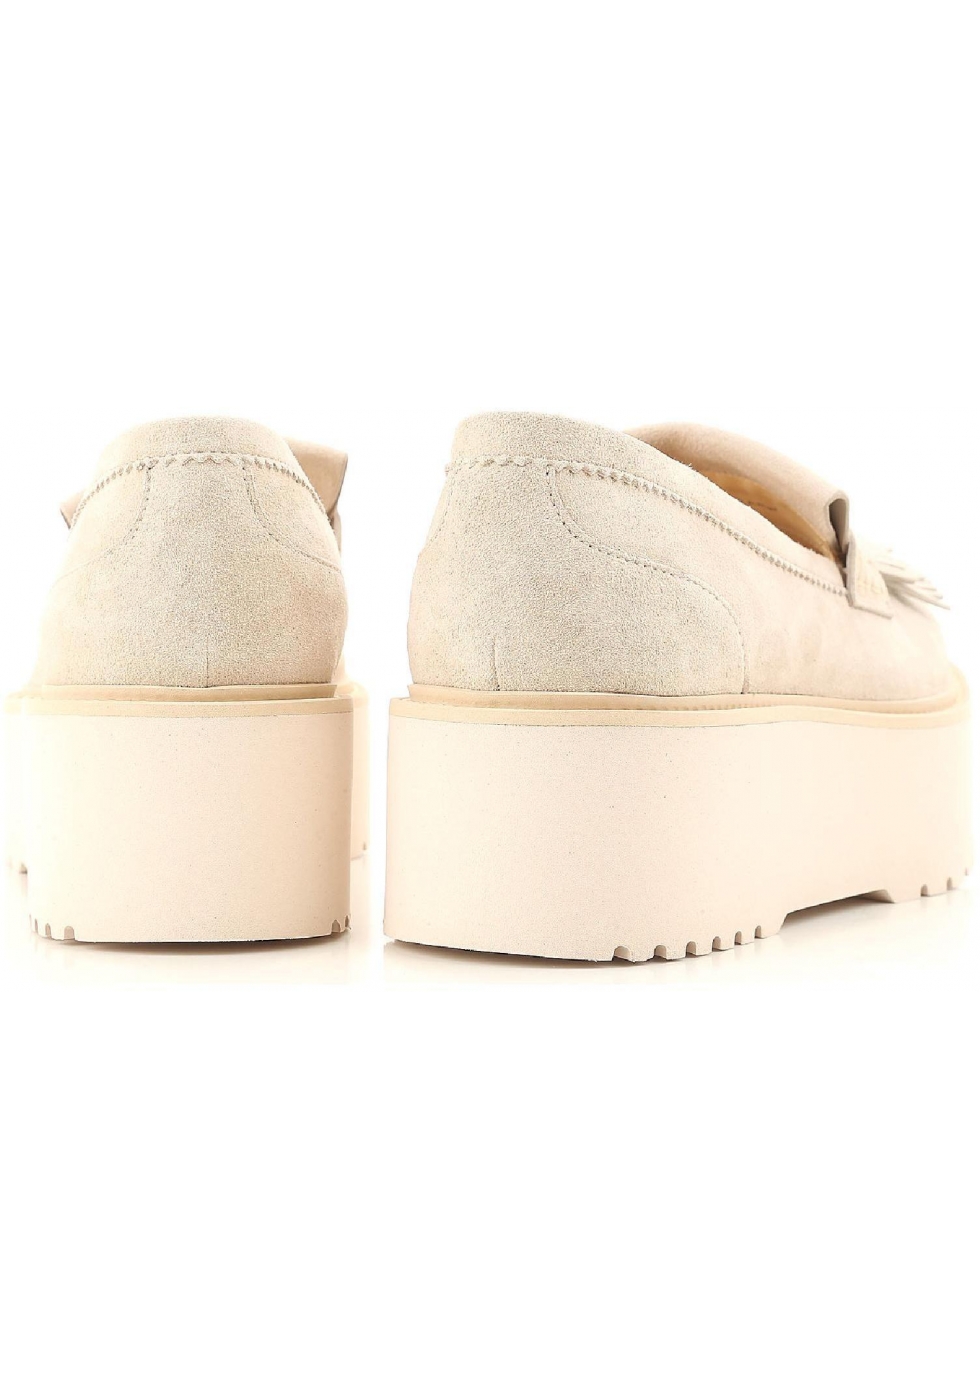 Hogan women's wedges loafers shoes in beige suede - Italian Boutique